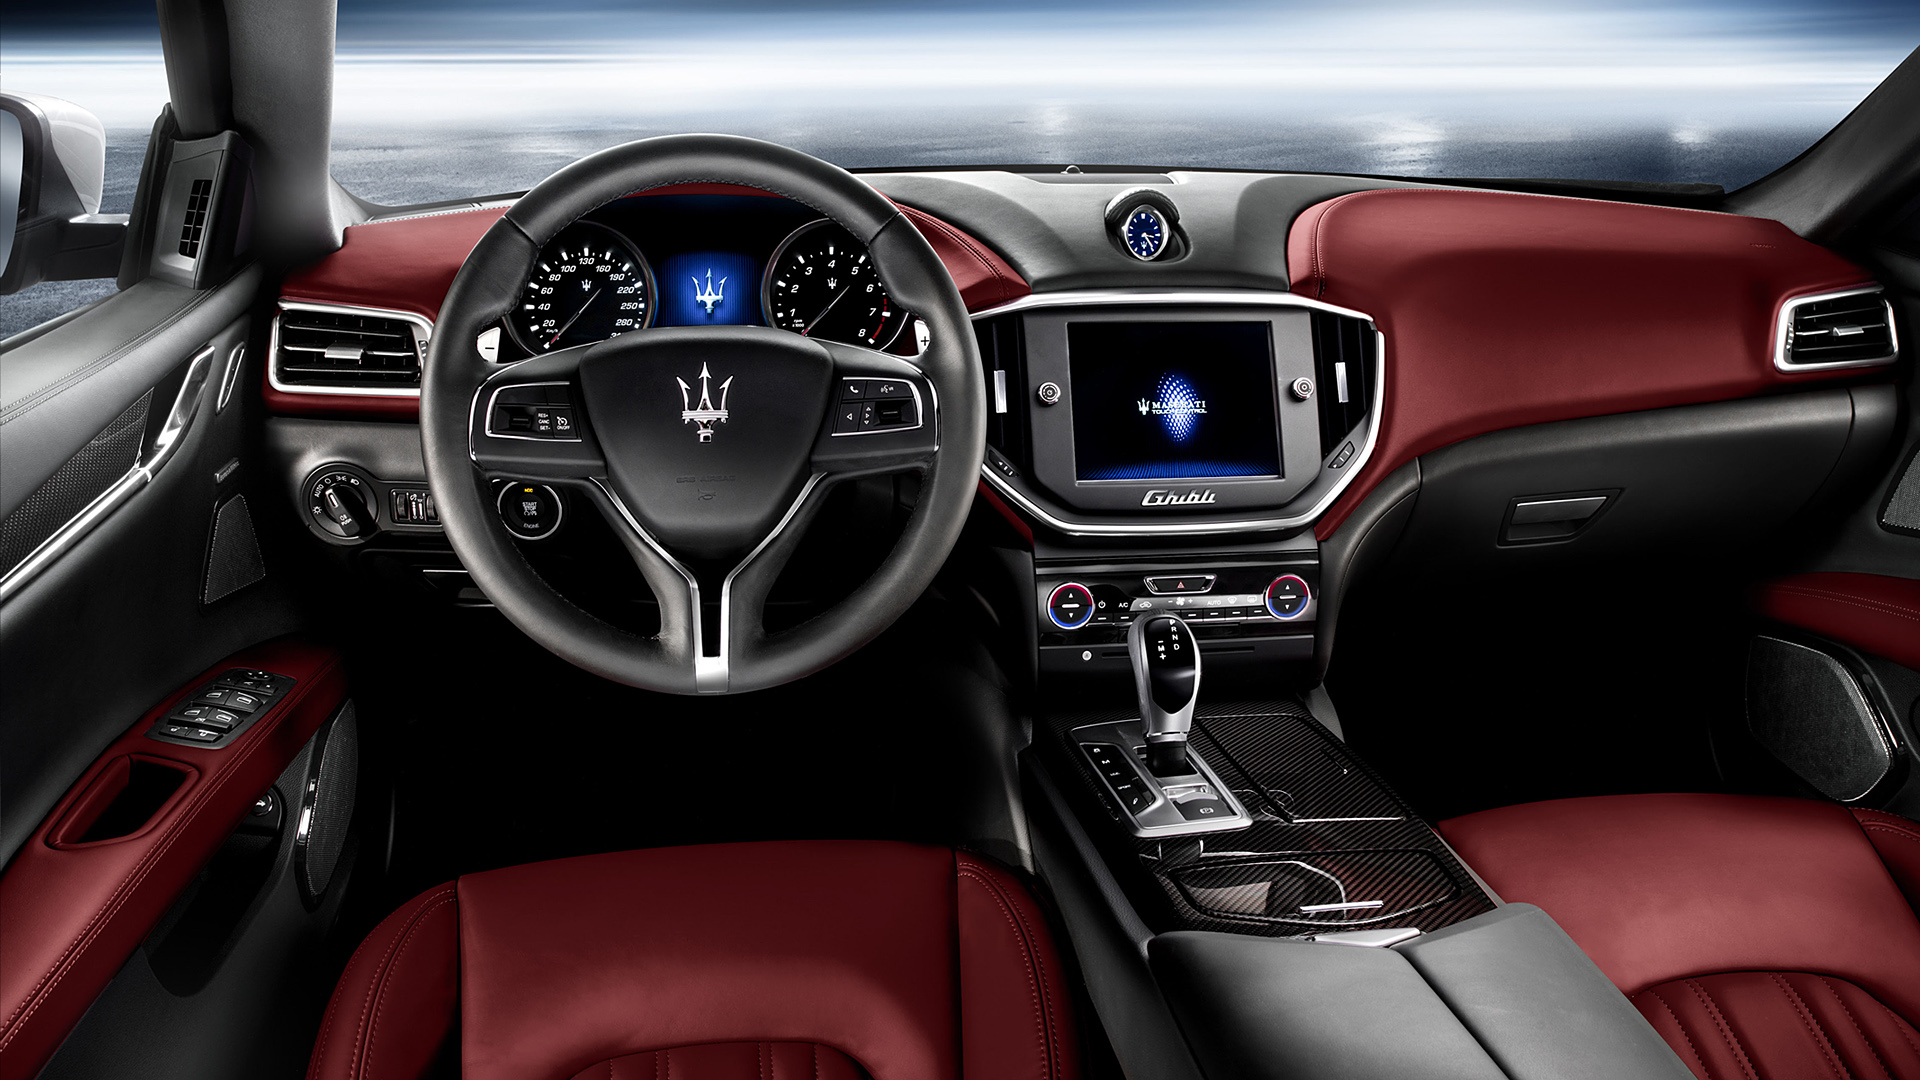  2014 Maserati Ghibli Wallpaper.